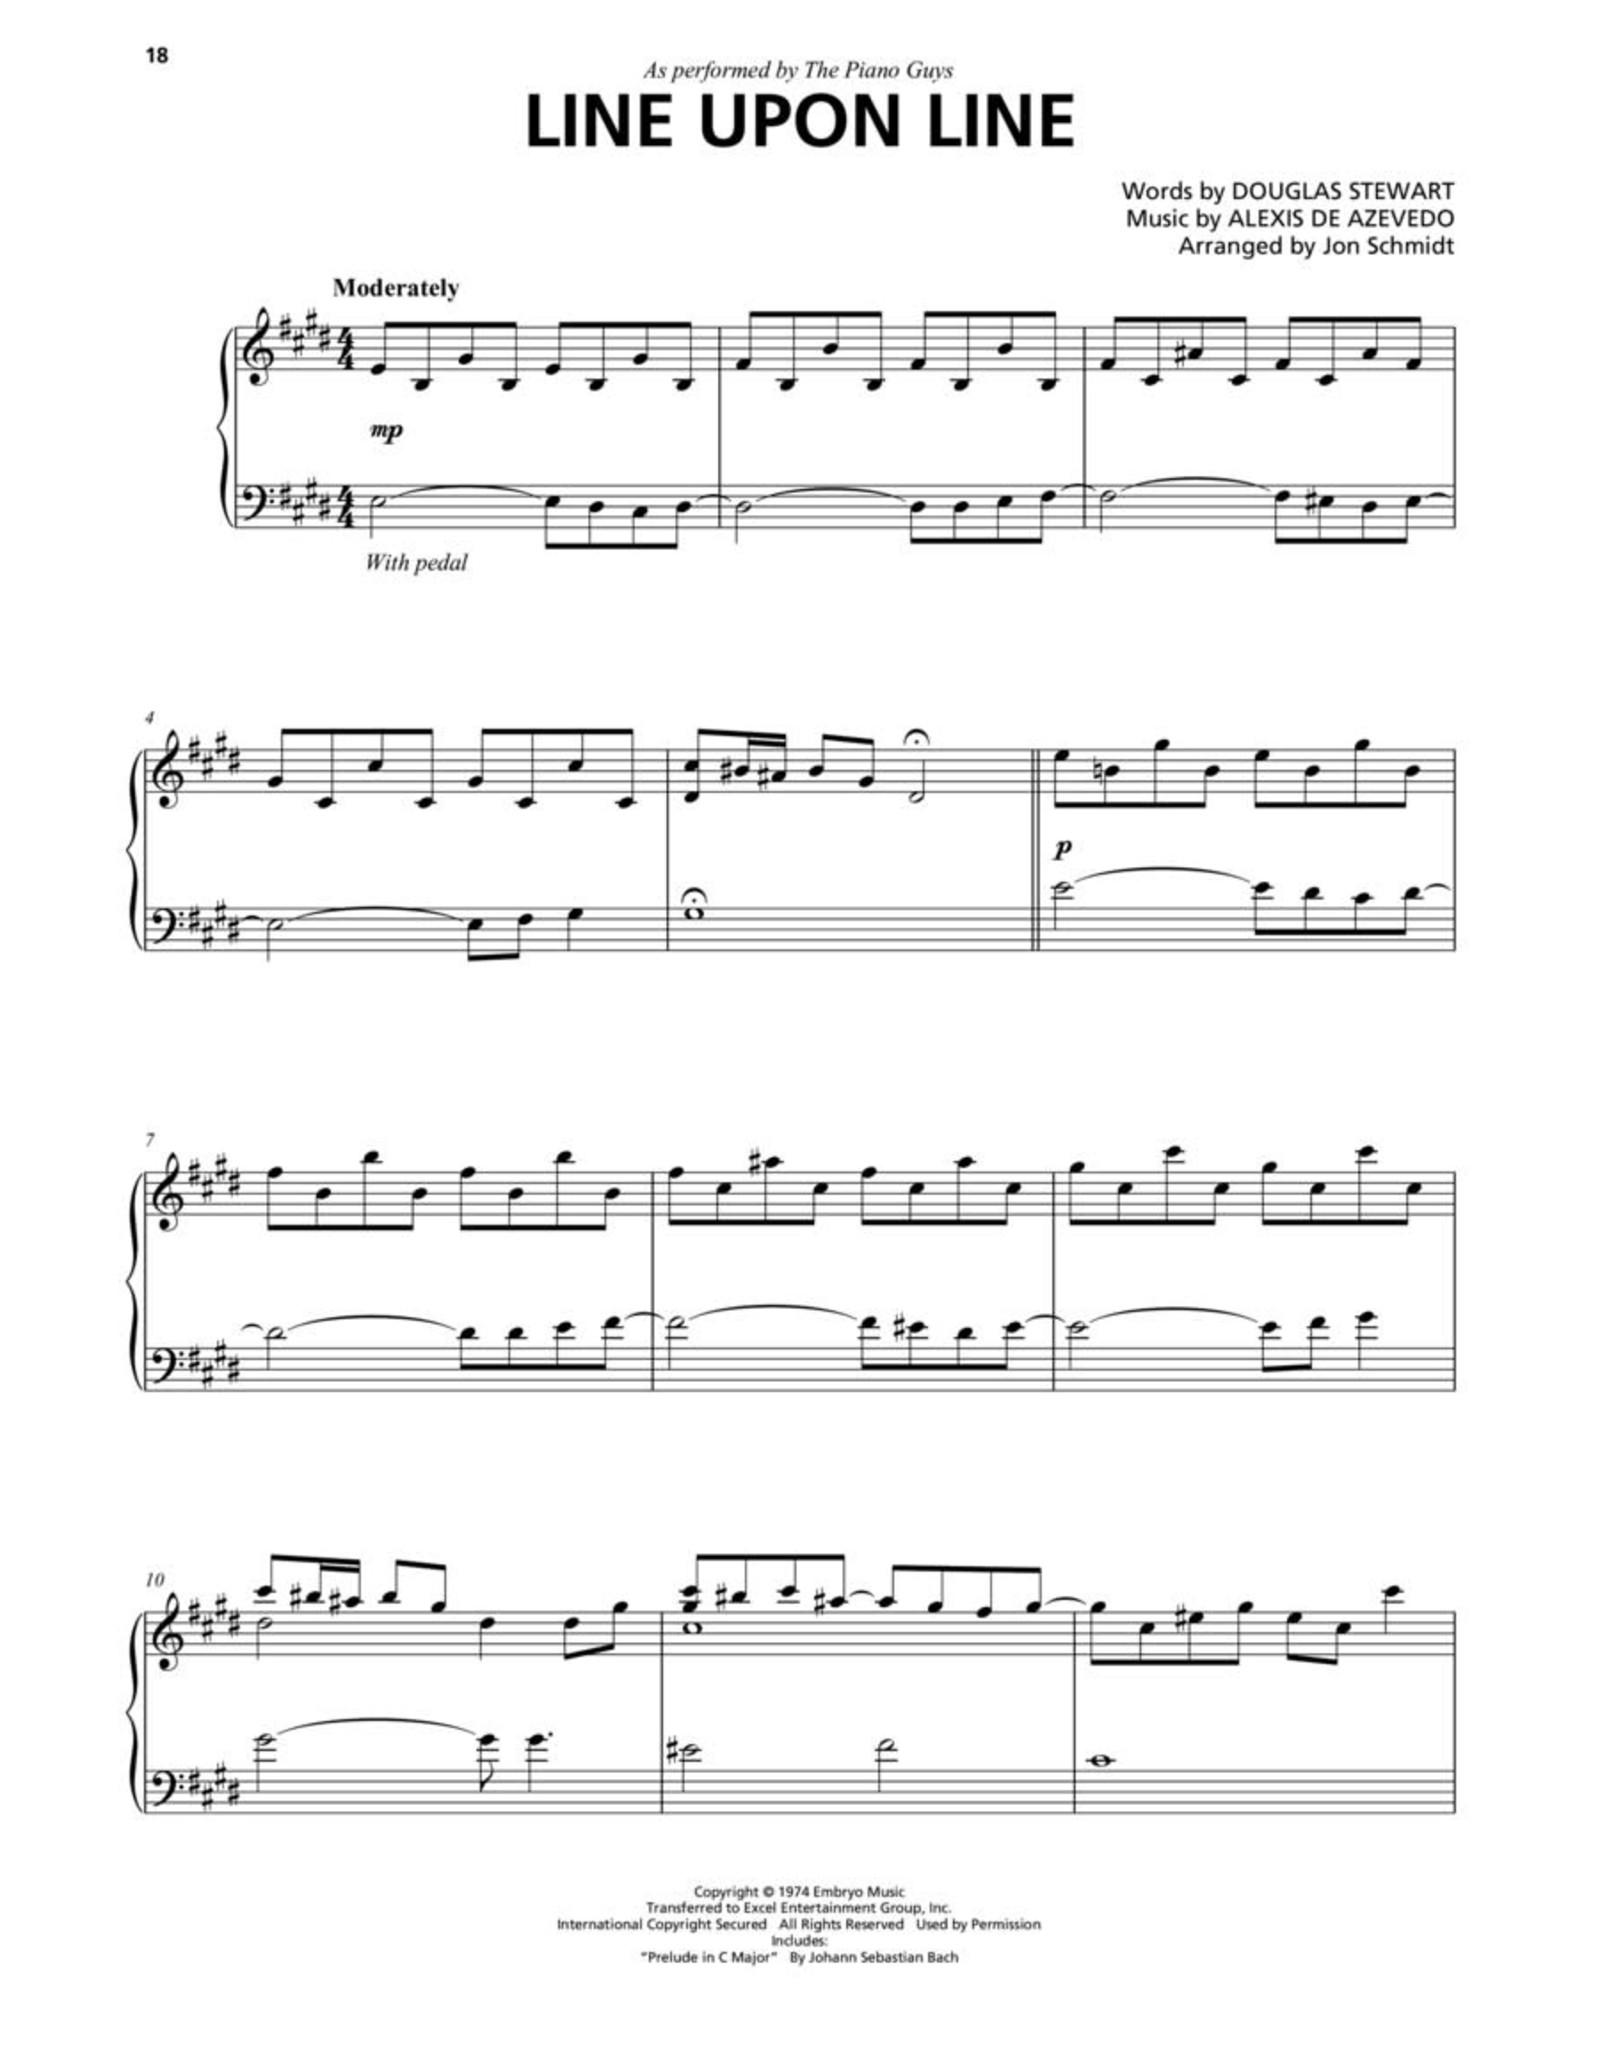 Hal Leonard Piano Guys - Covers Piano Solo with Optional Cello